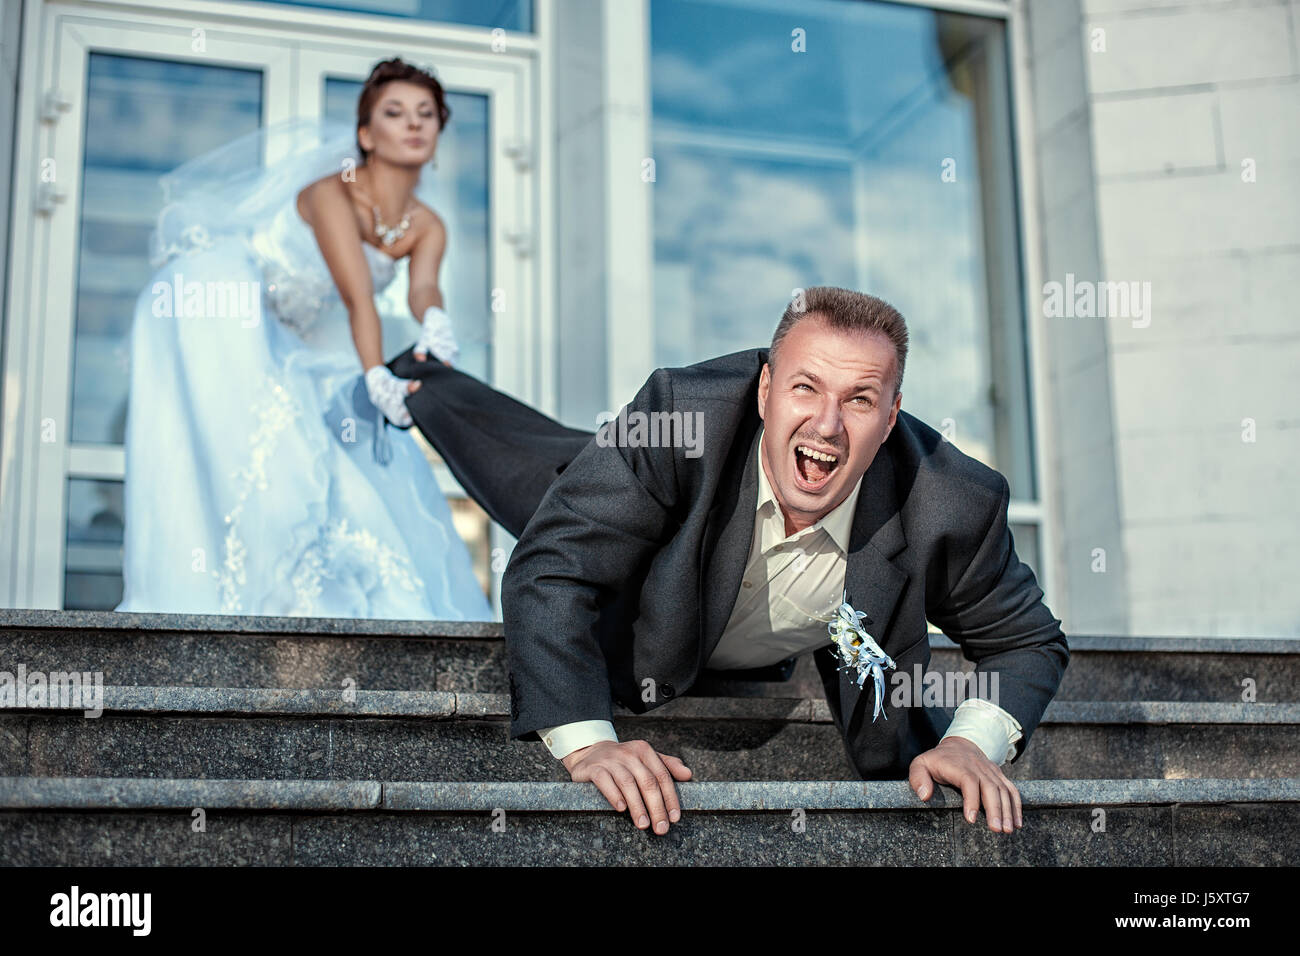 Bride groom Tire la jambe au mariage. Banque D'Images